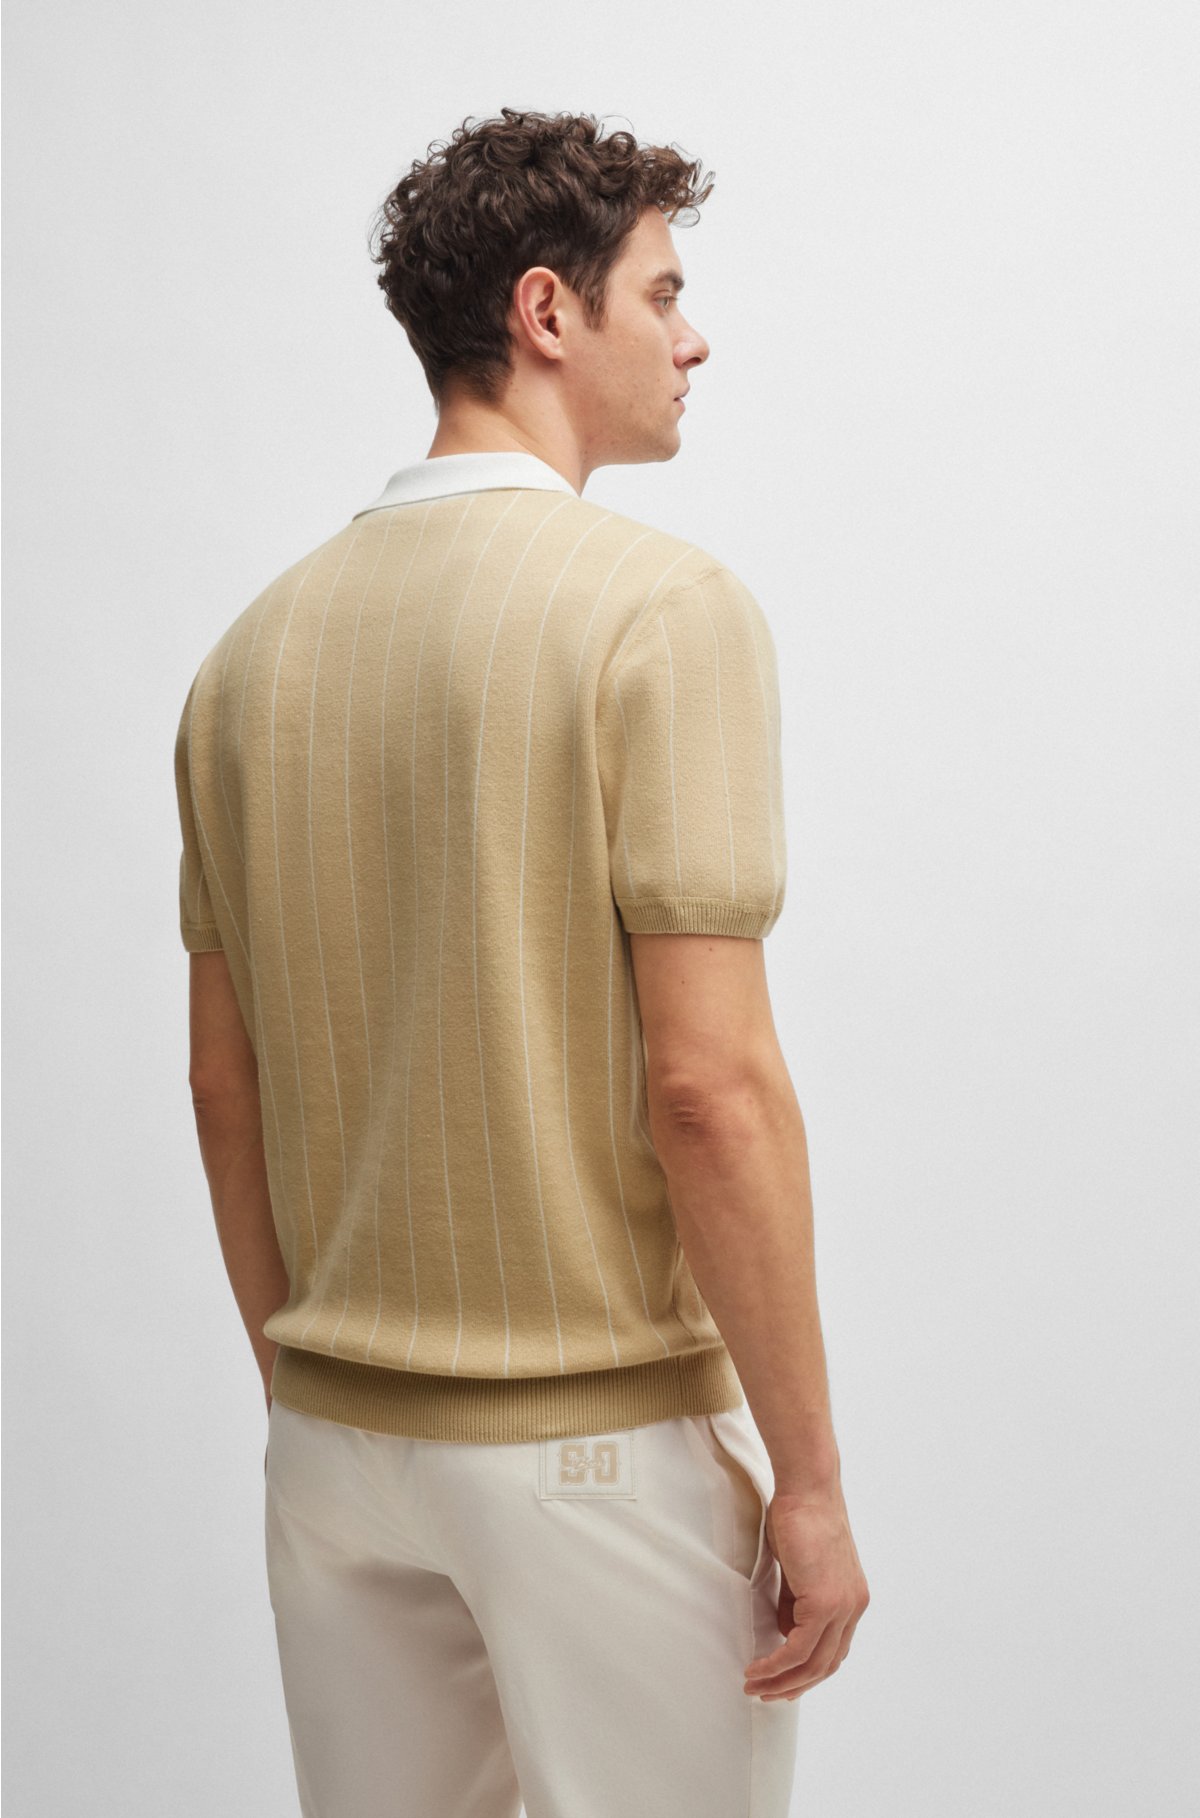 BOSS x Shohei Ohtani cotton-knit polo shirt with monogram patch, Light Beige